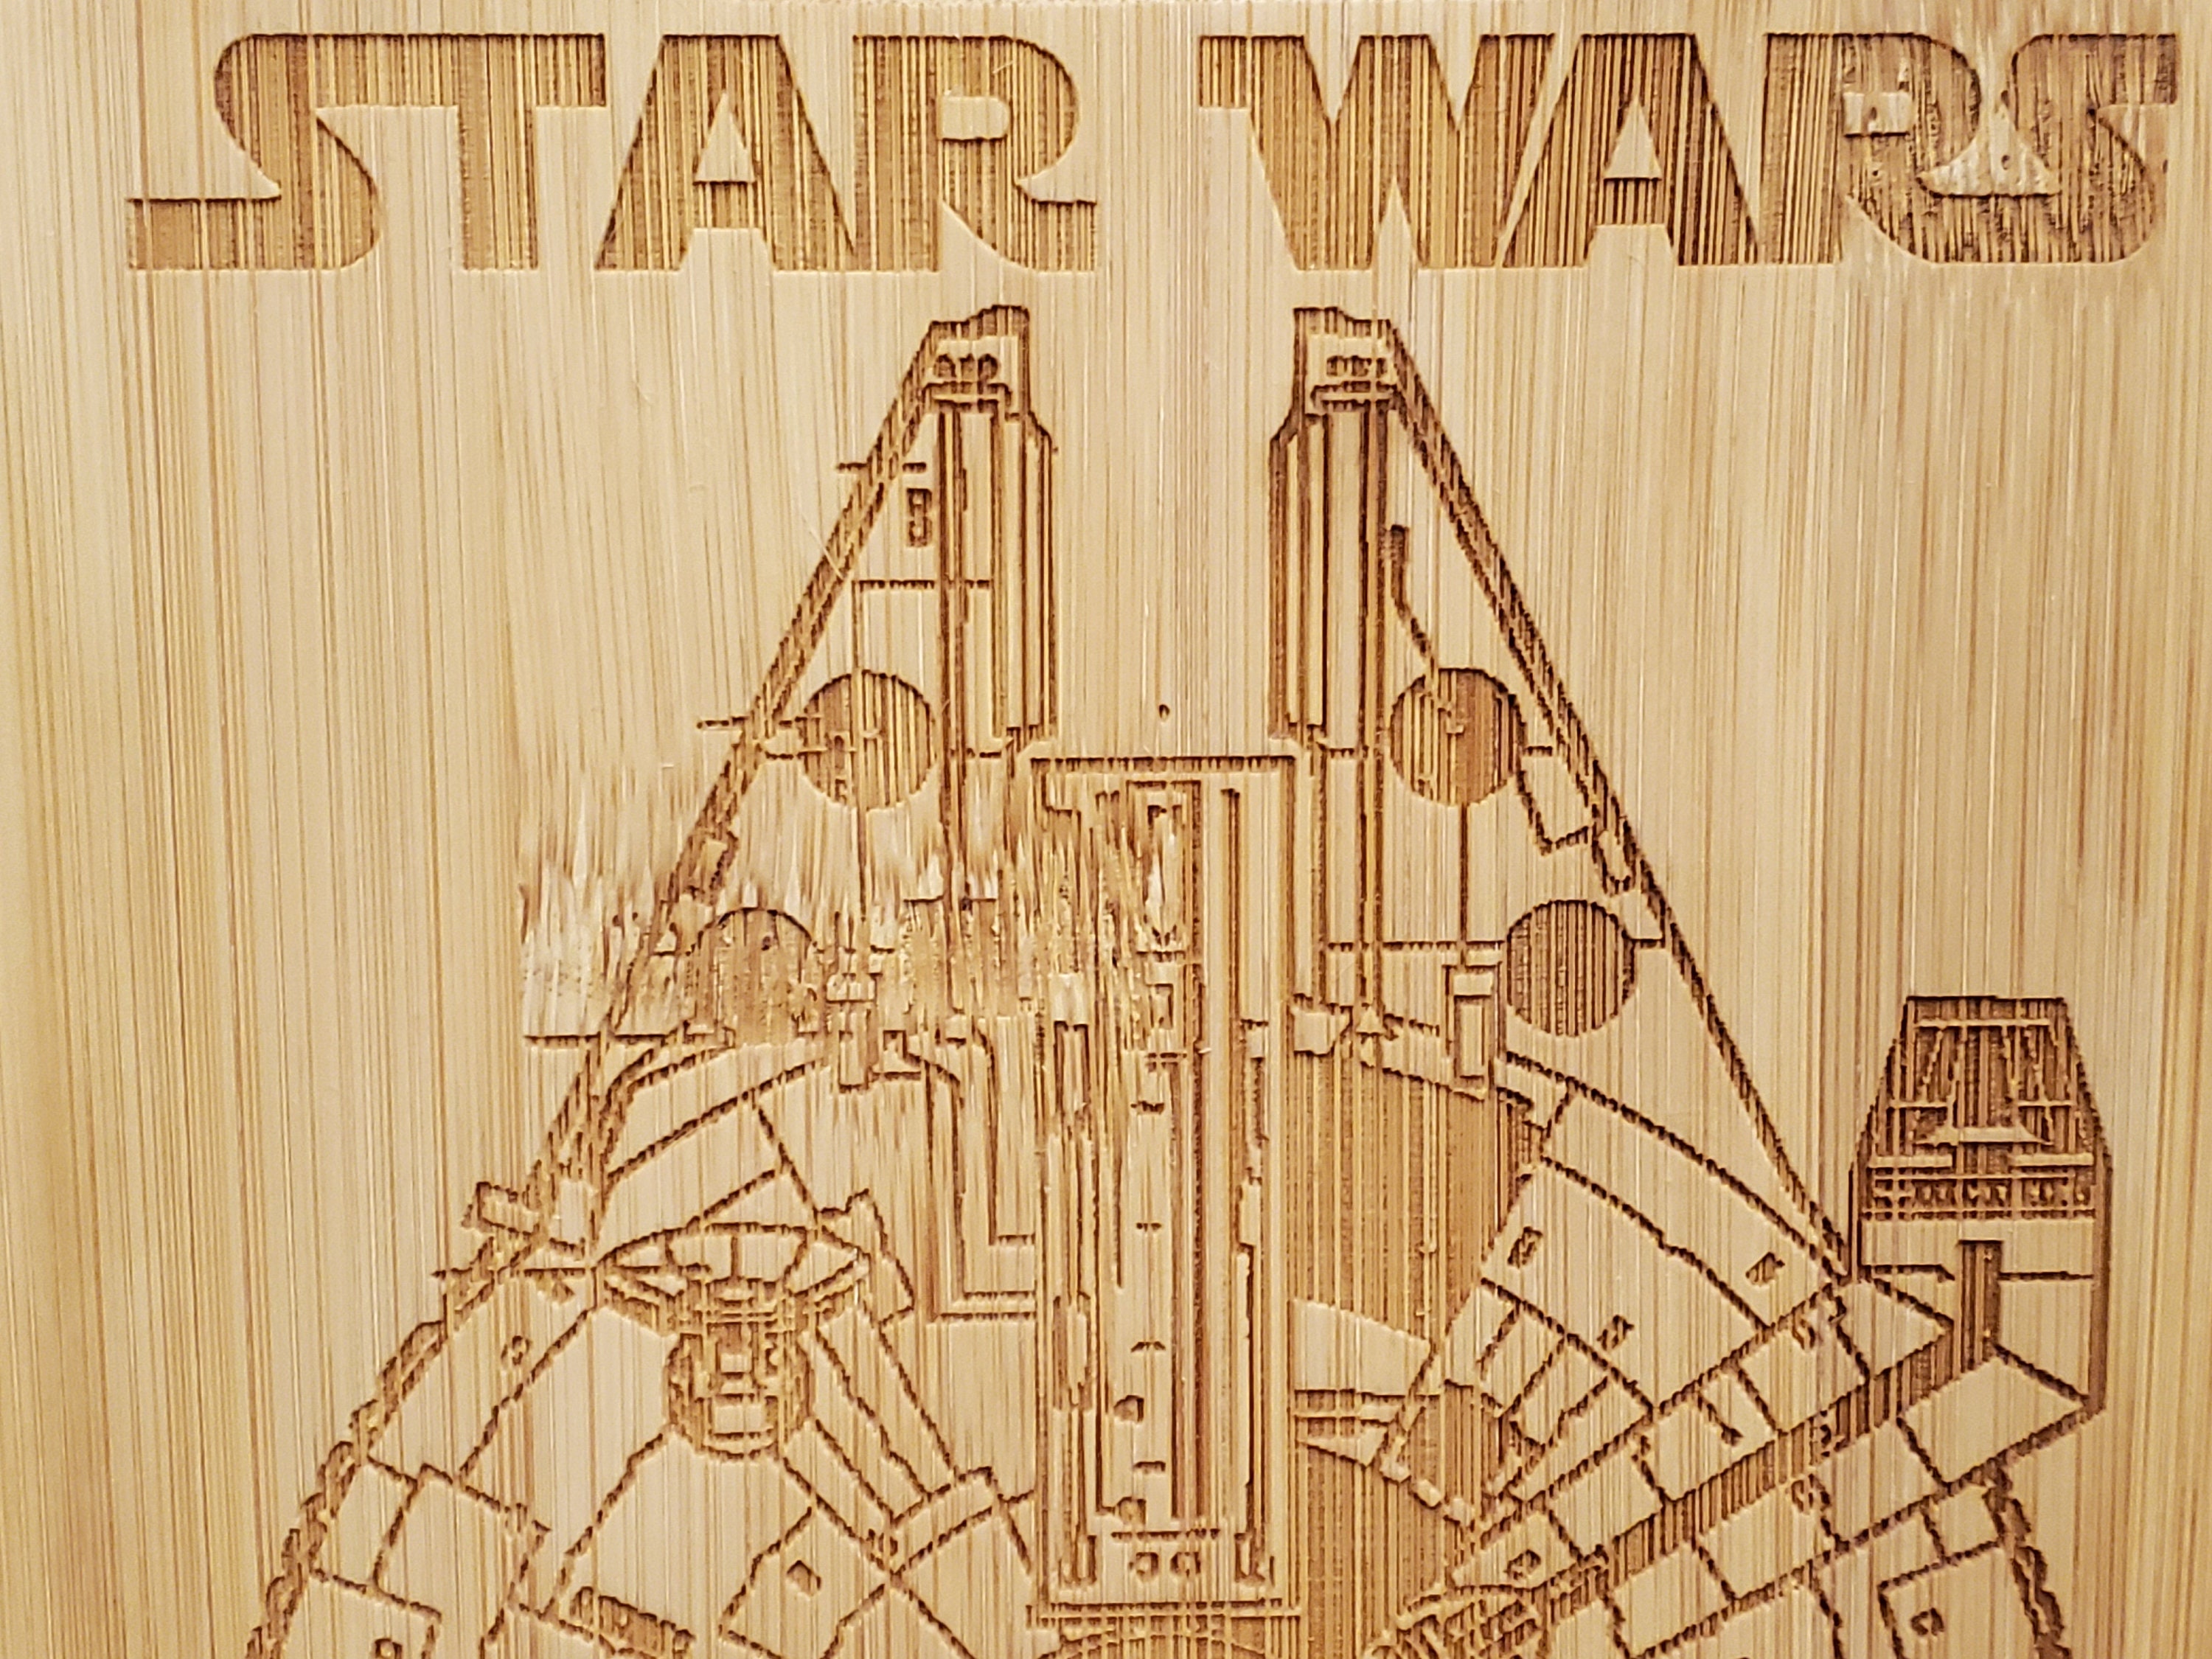 Star Wars Millennium Falcon Chopping Board » Gadget Flow